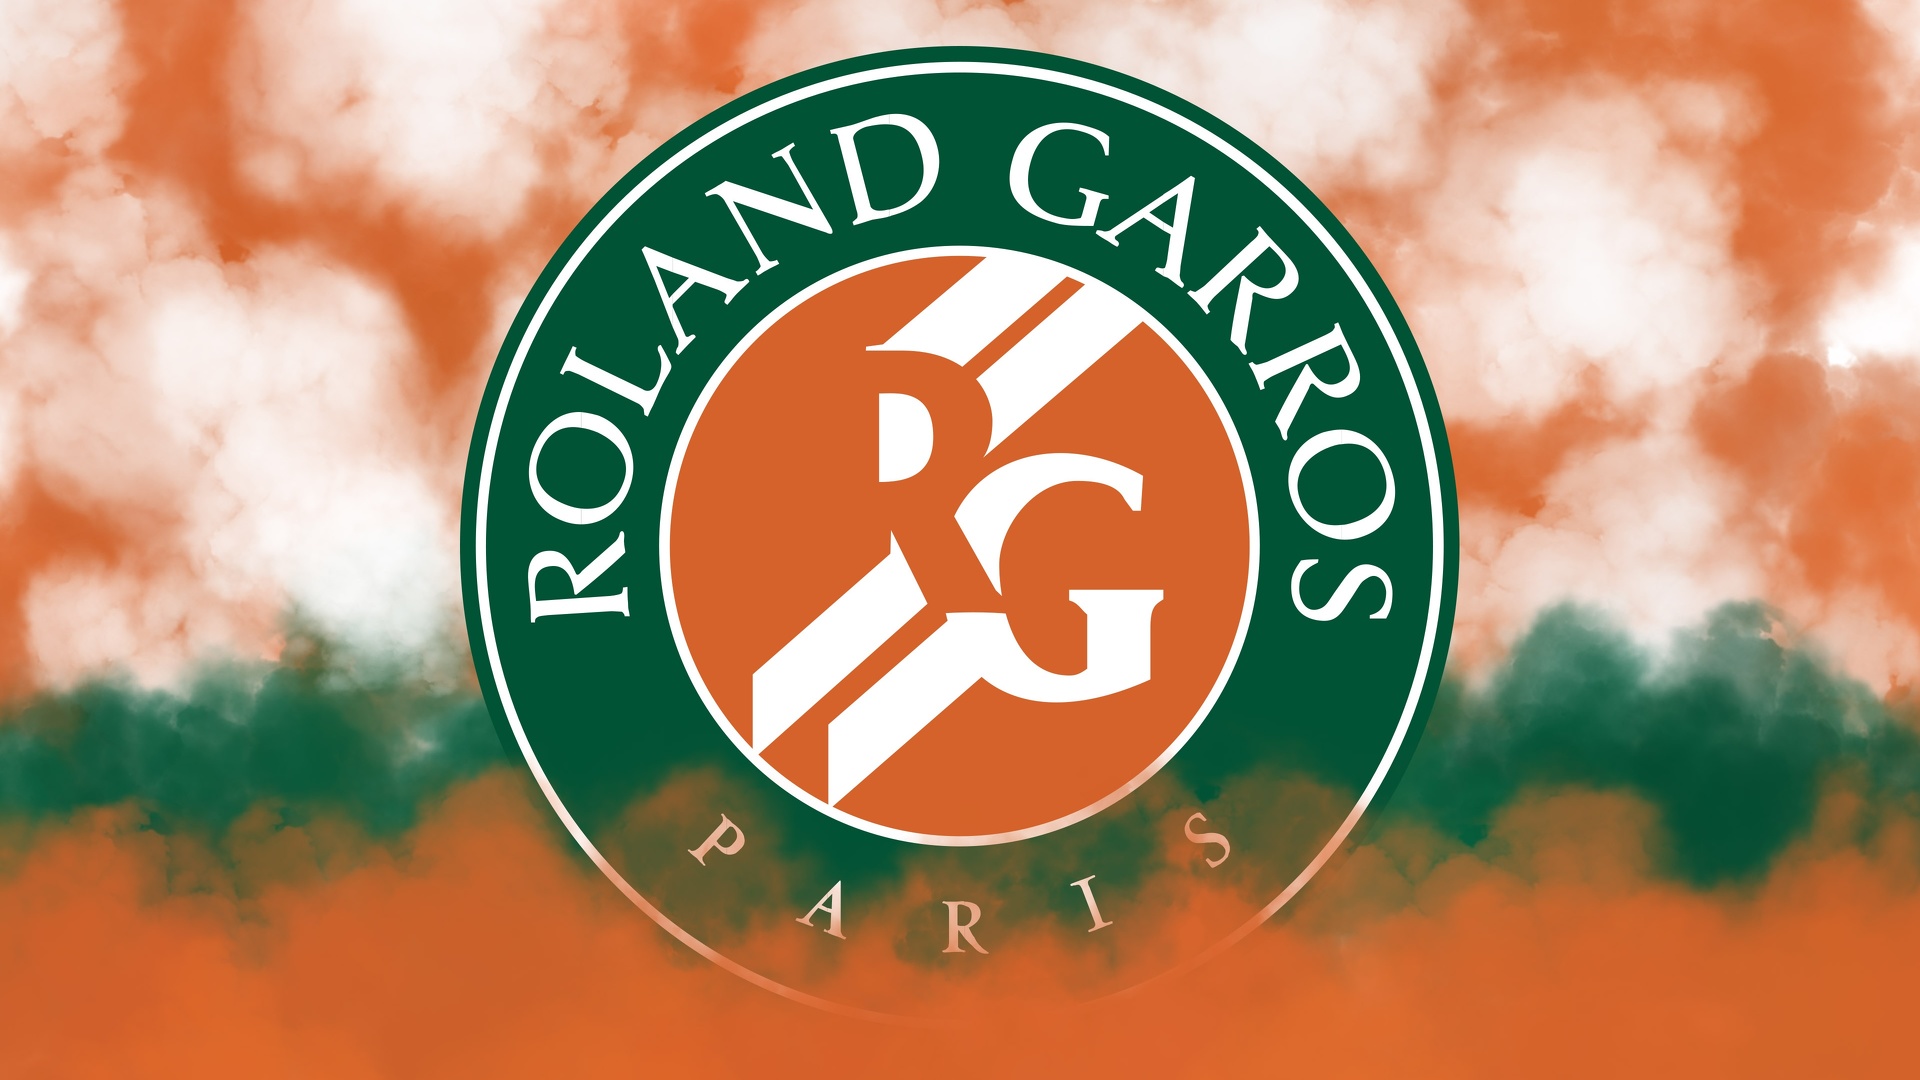 Roland Garros - fond d'écran.jpg